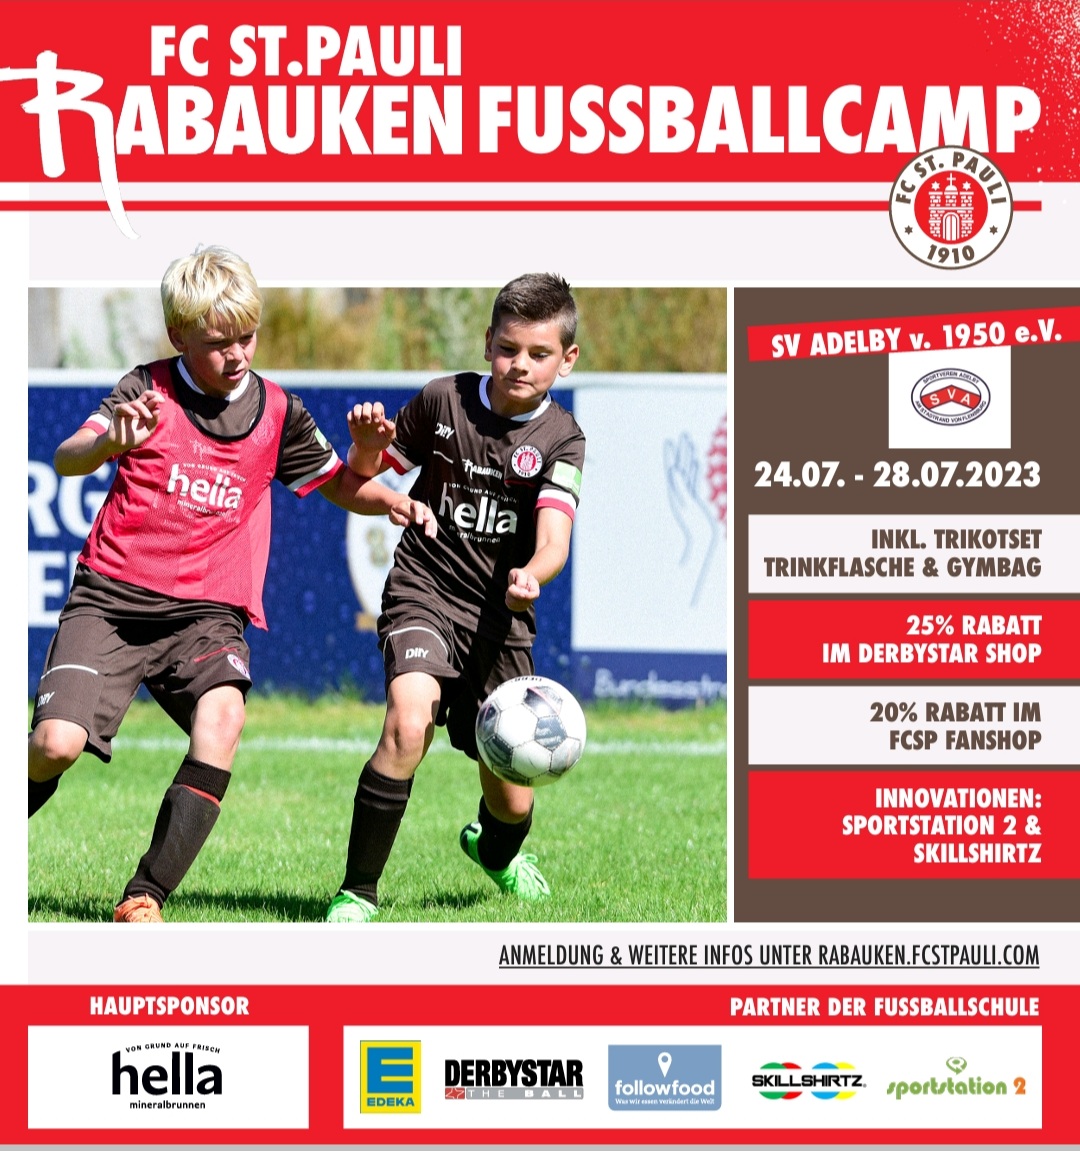 Die FC St. Pauli Rabaukenschule kommt wieder